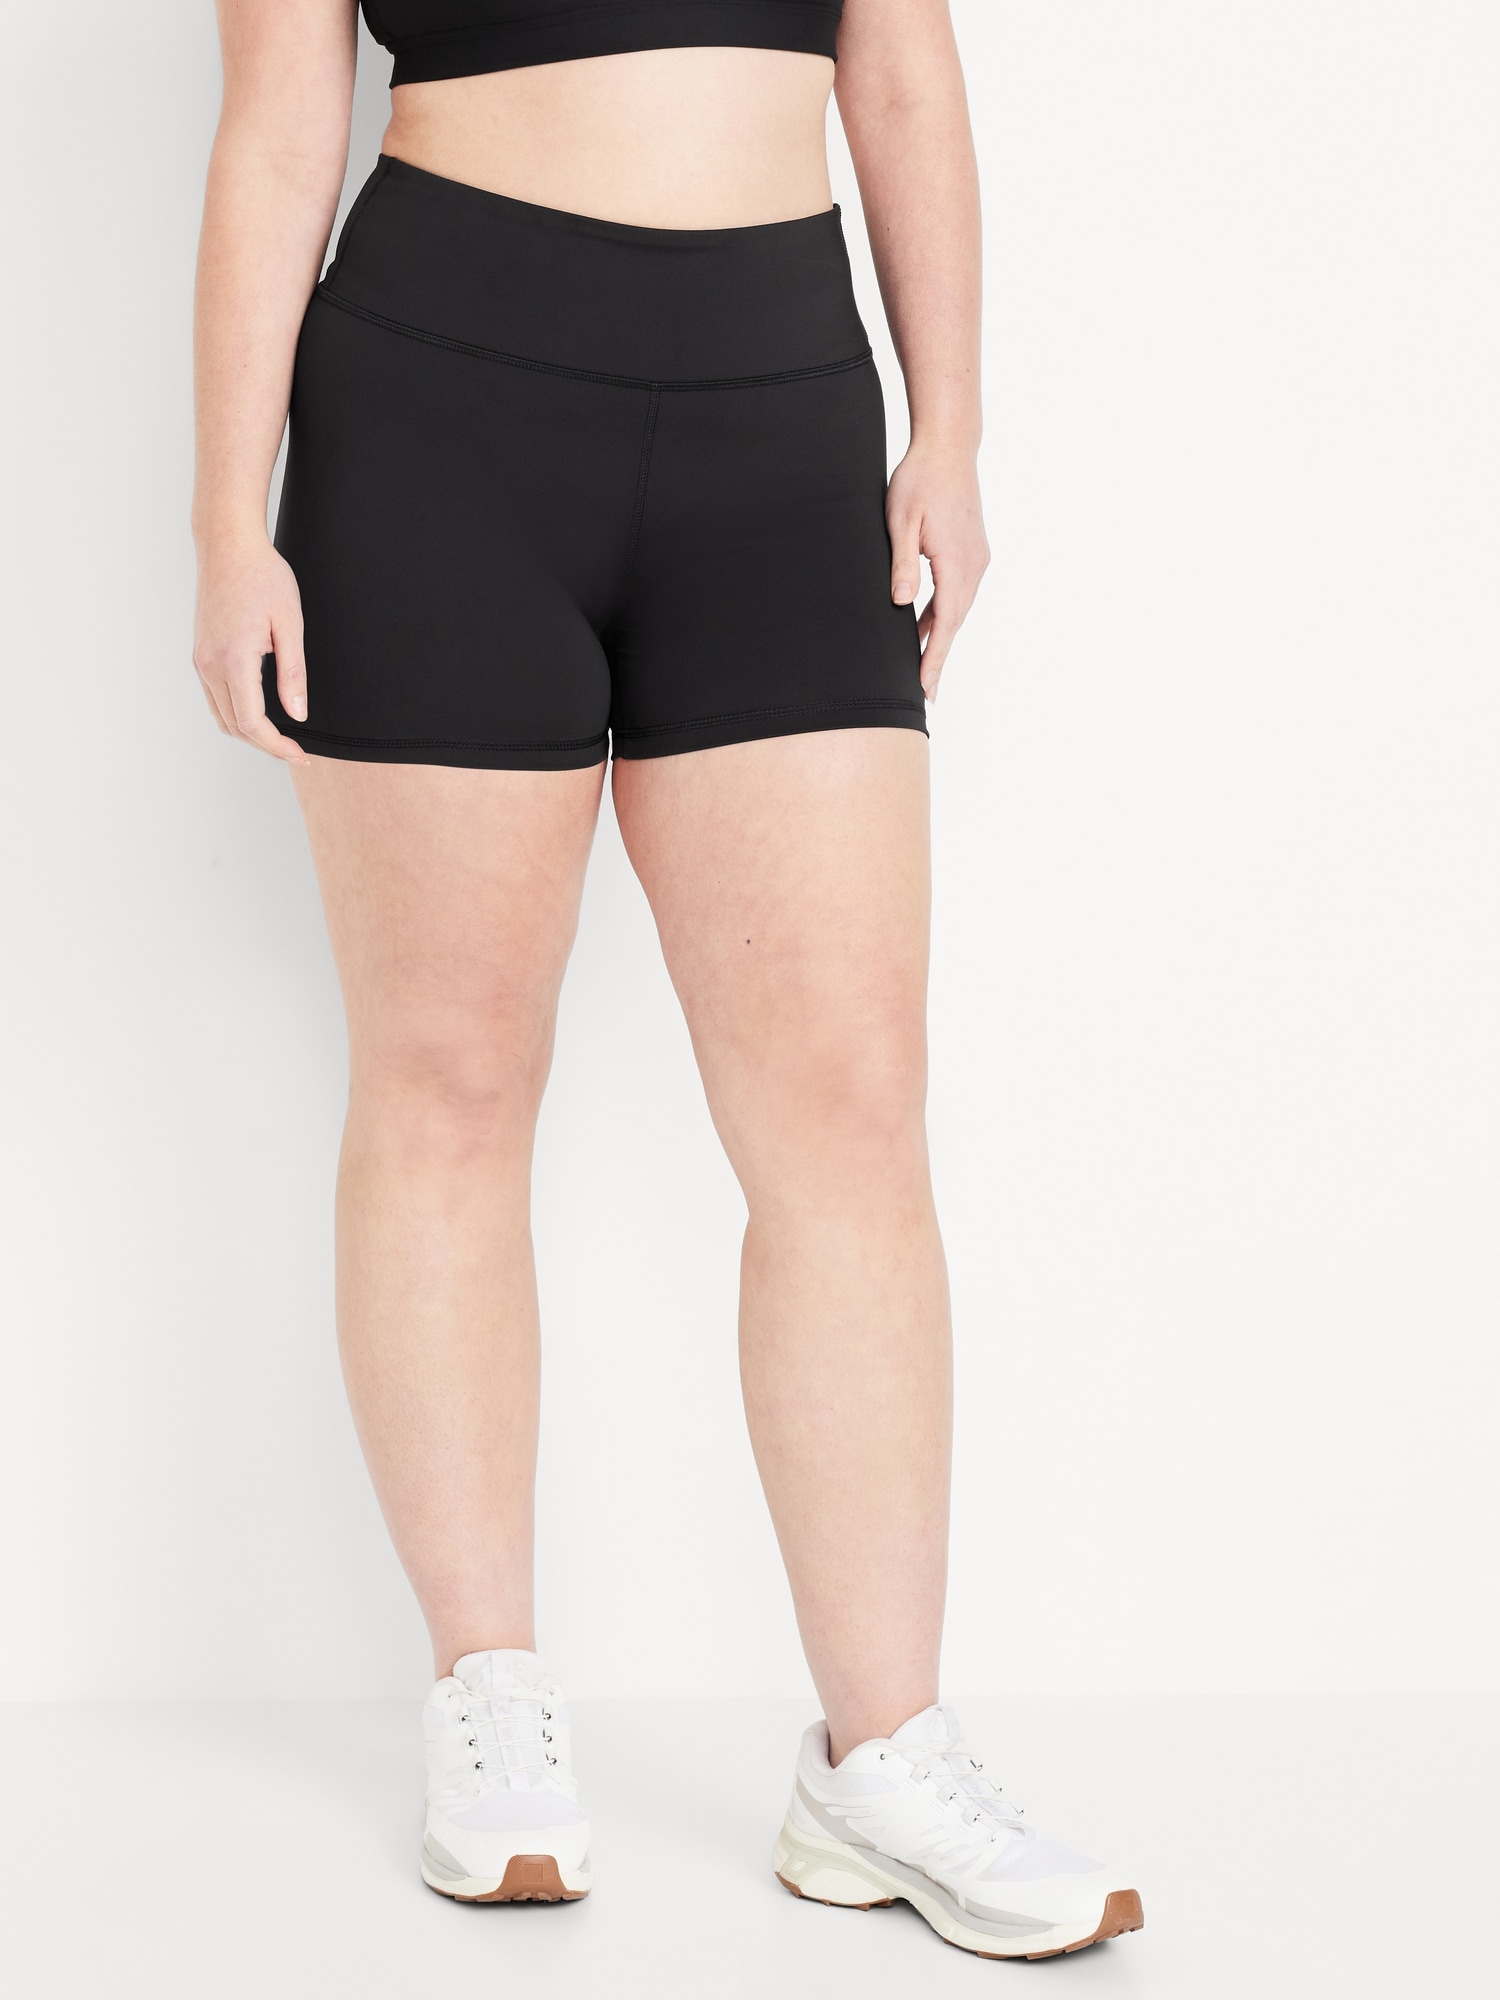 High-Waisted PowerSoft Biker Shorts -- 4-inch inseam